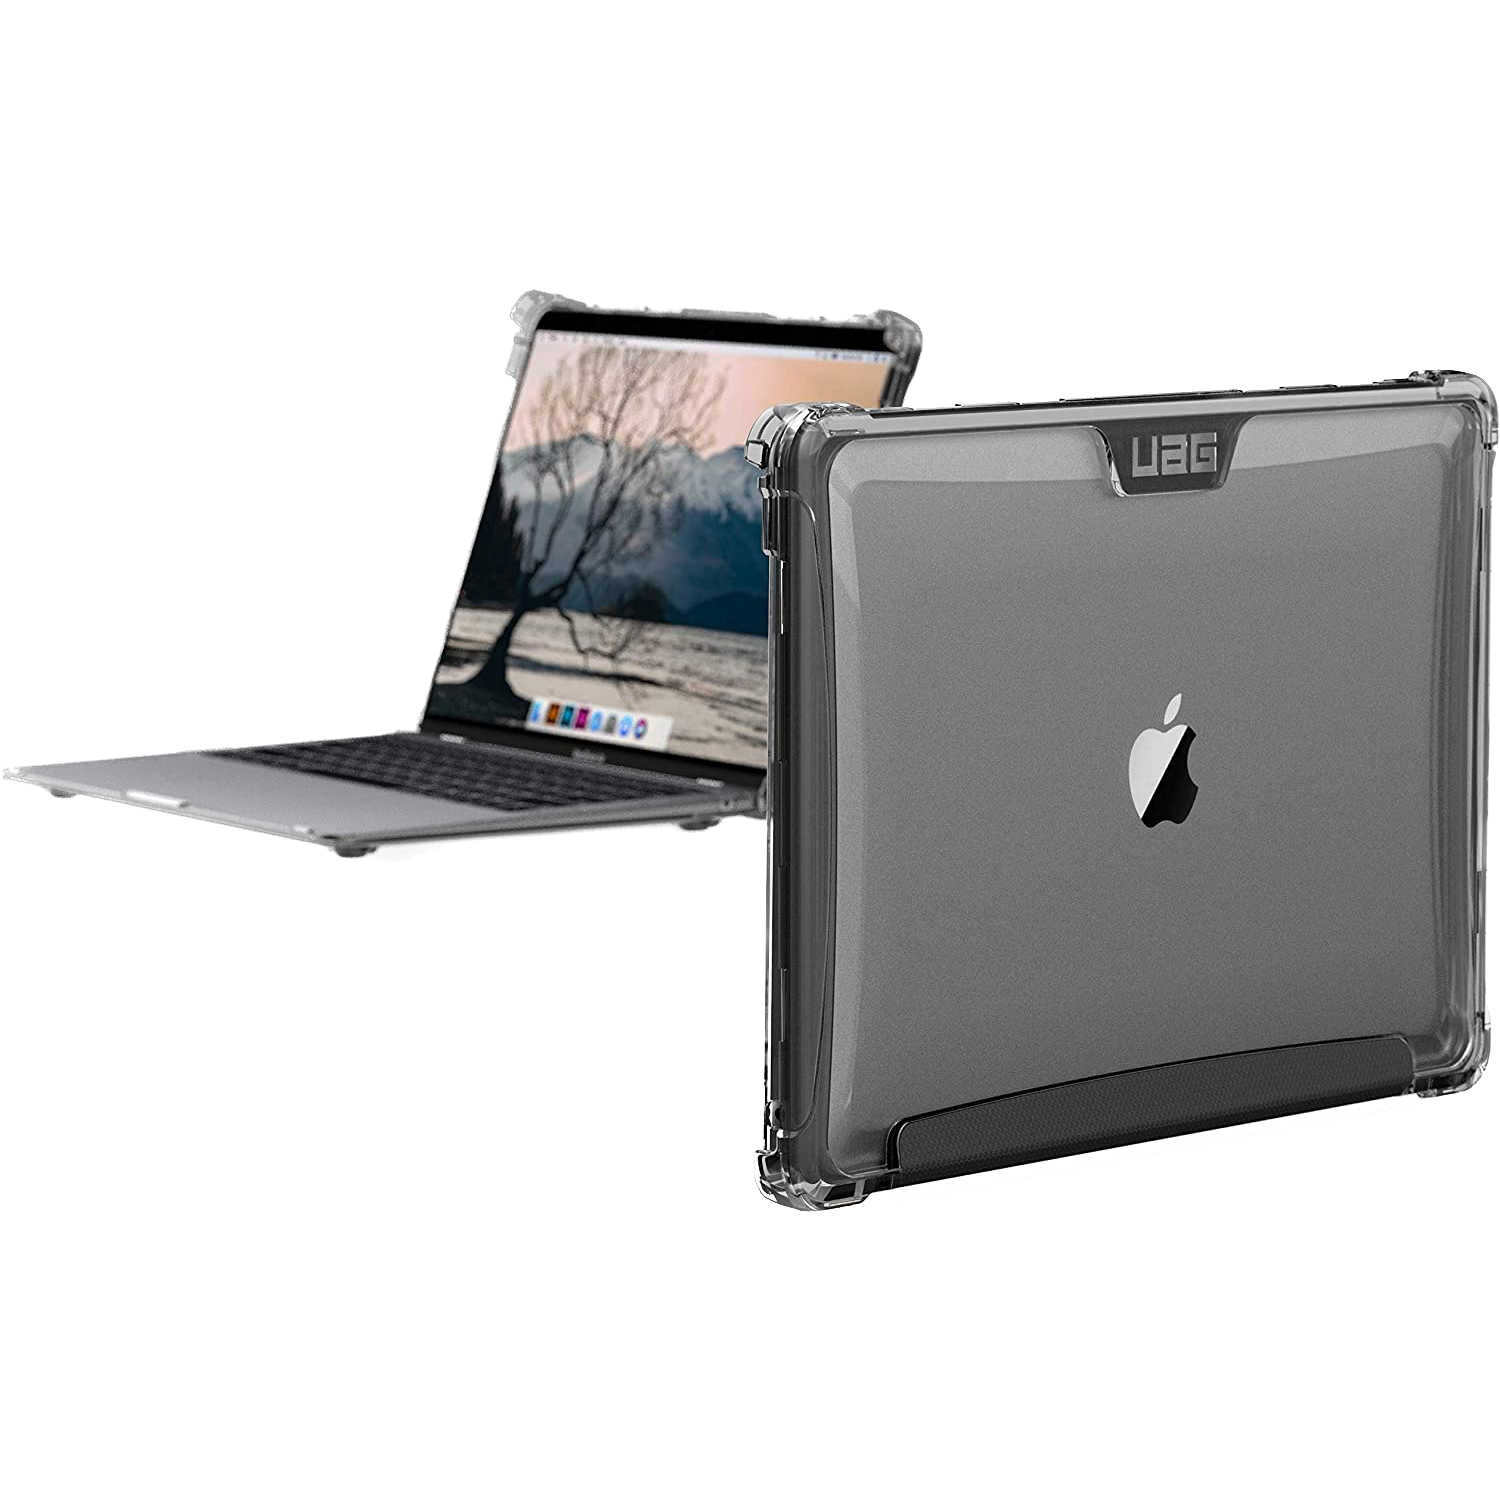 UAG MacBook Air case